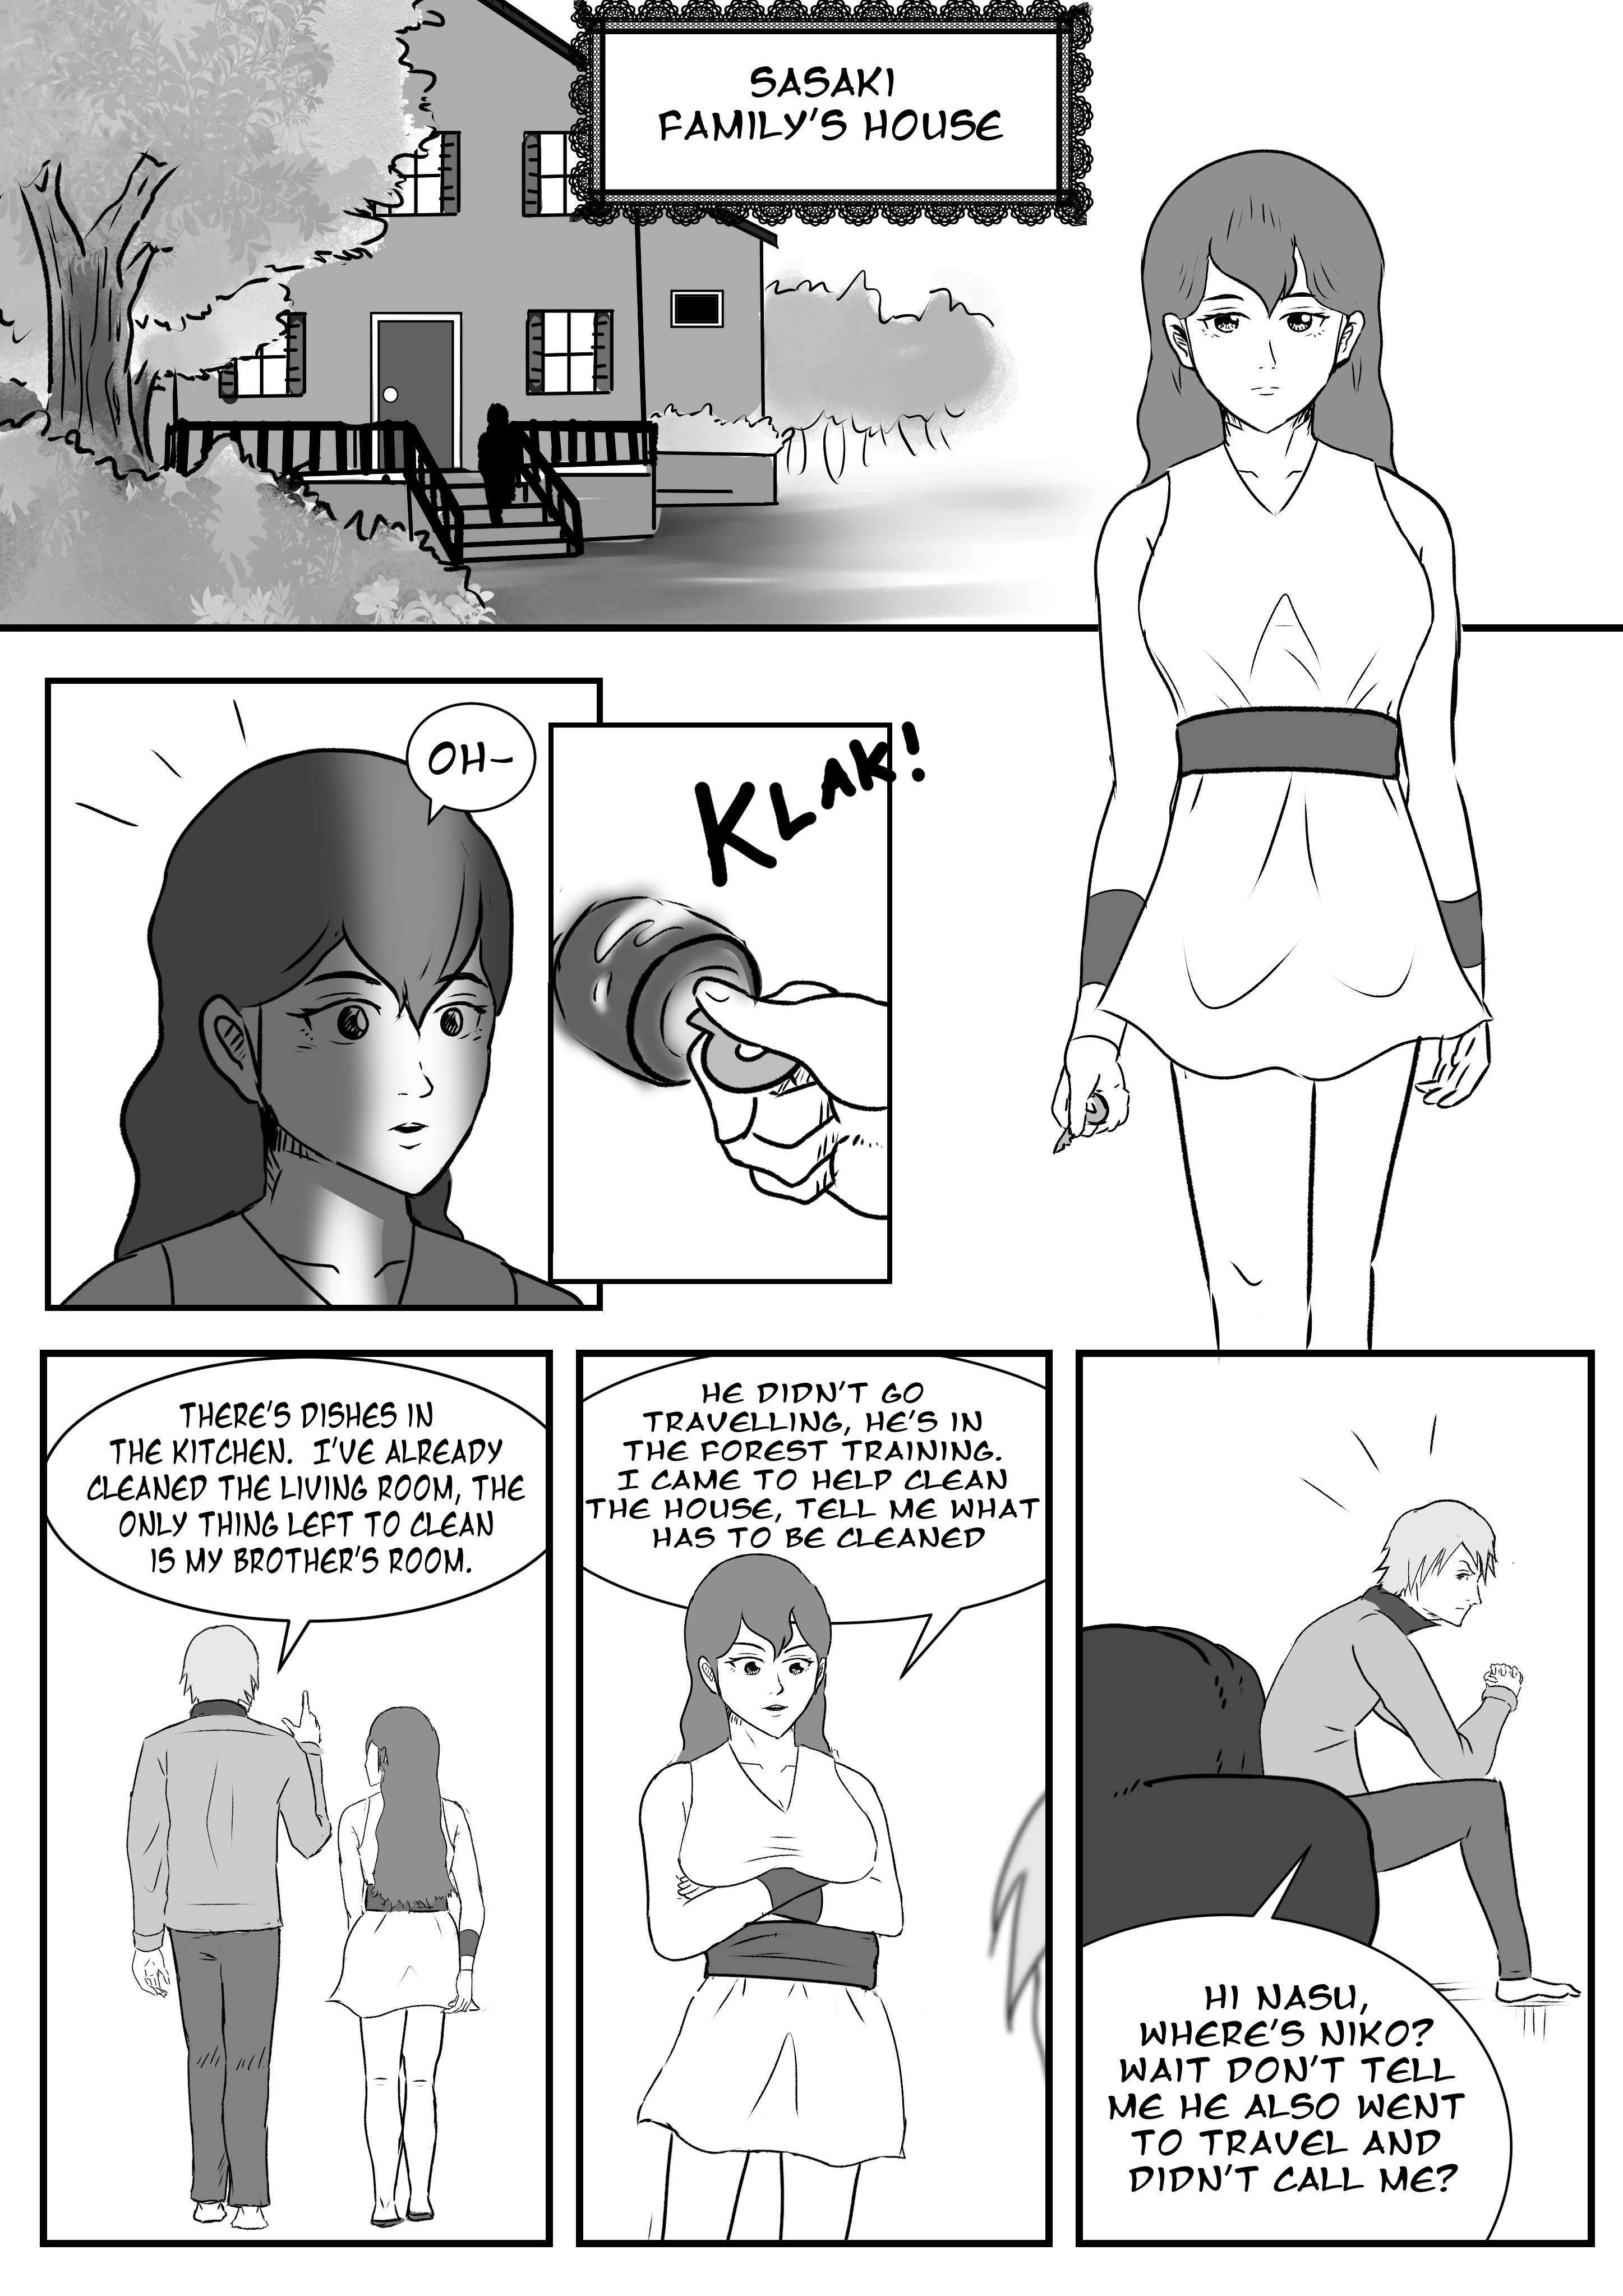 Lendarios Story - Page 2